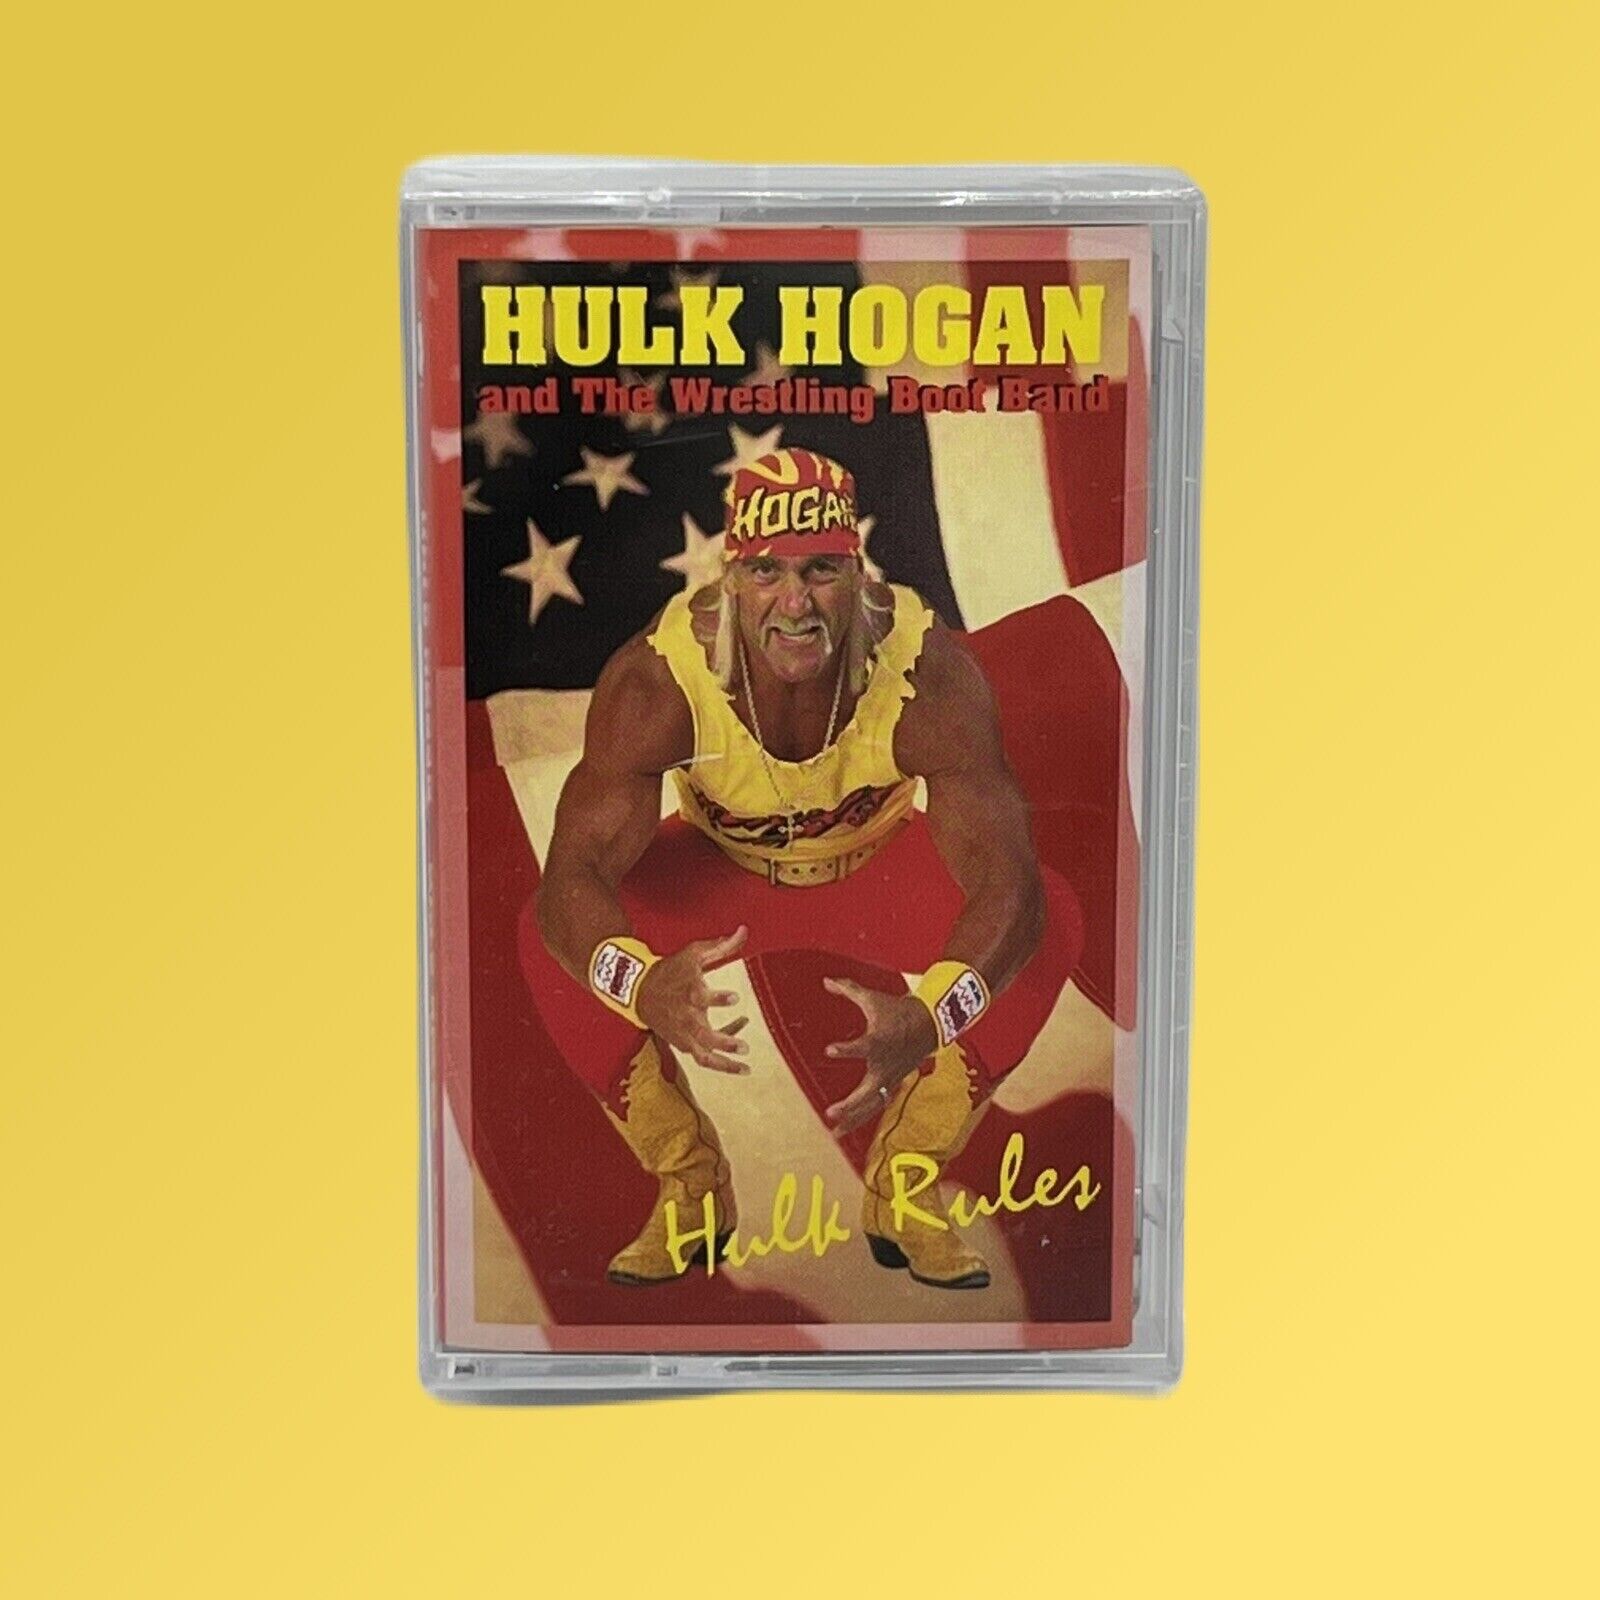 CASSETTE TAPE Hulk Hogan and The Wrestling Boot Band WWF WWE (BRAND NEW)